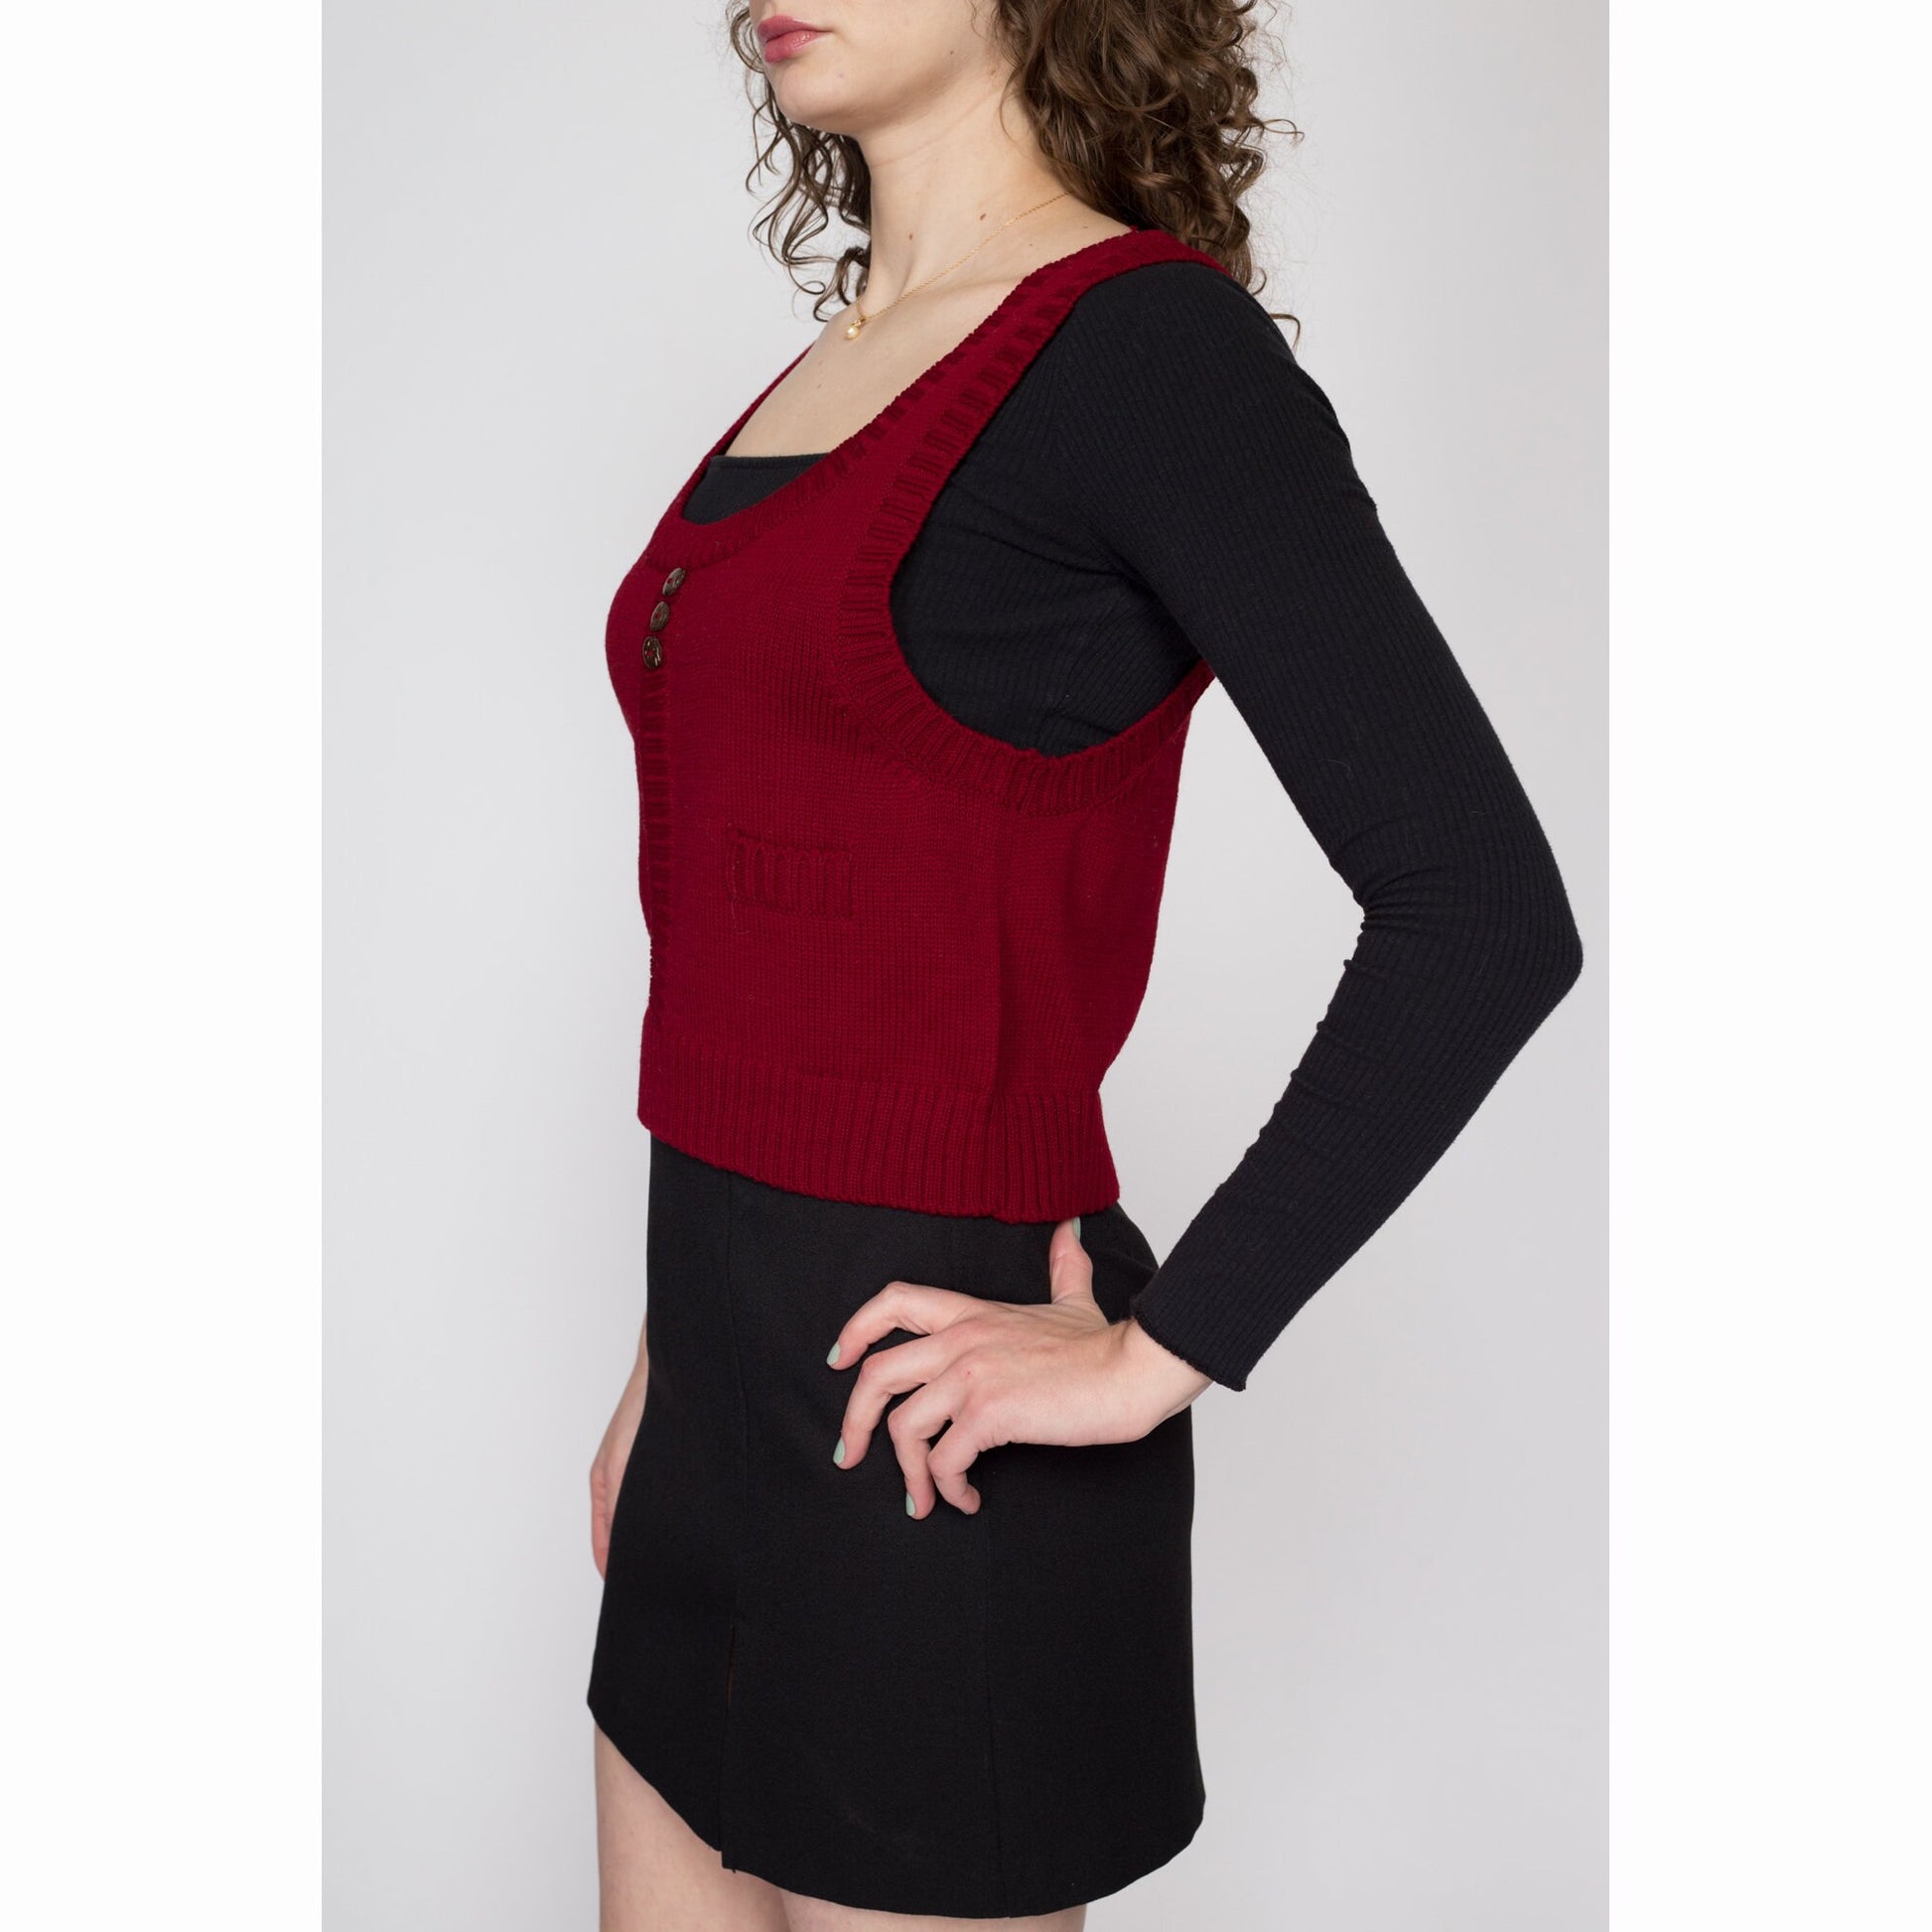 Med-Lrg 80s Wine Red Knit Vest Top | Vintage Scoop Neck Cropped Sleeveless Sweater